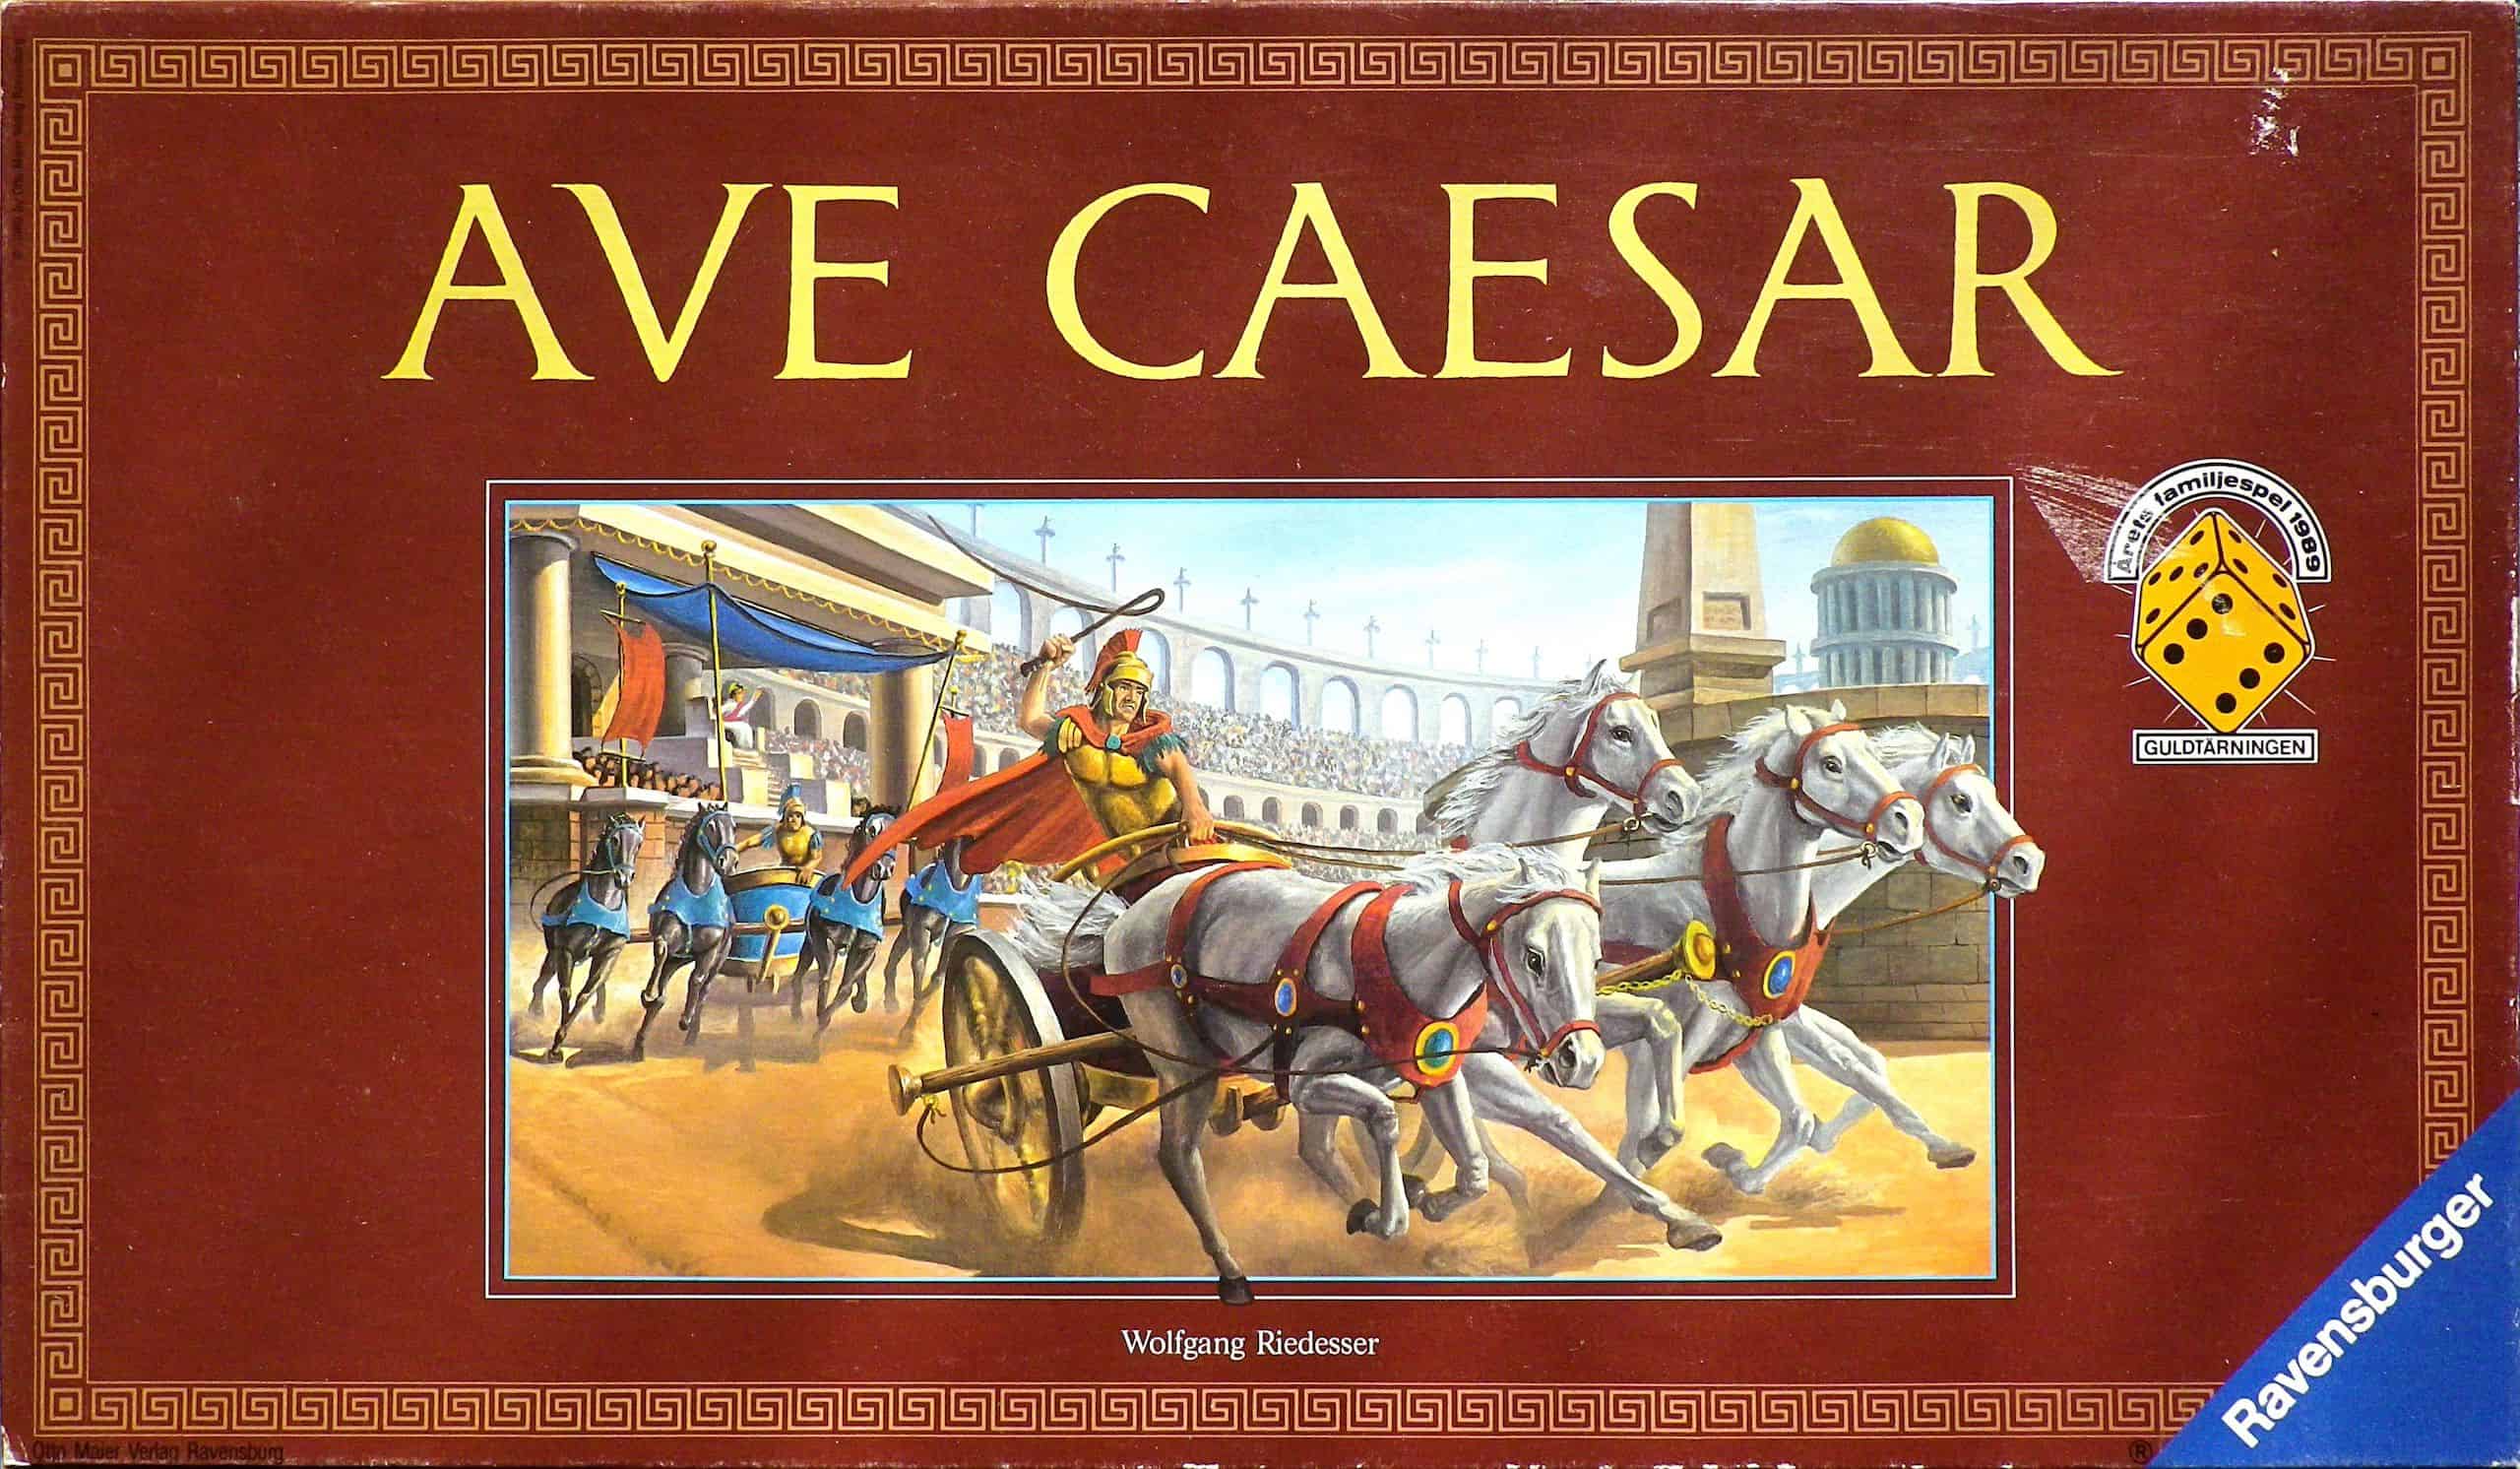 Ave Caesarin kansi